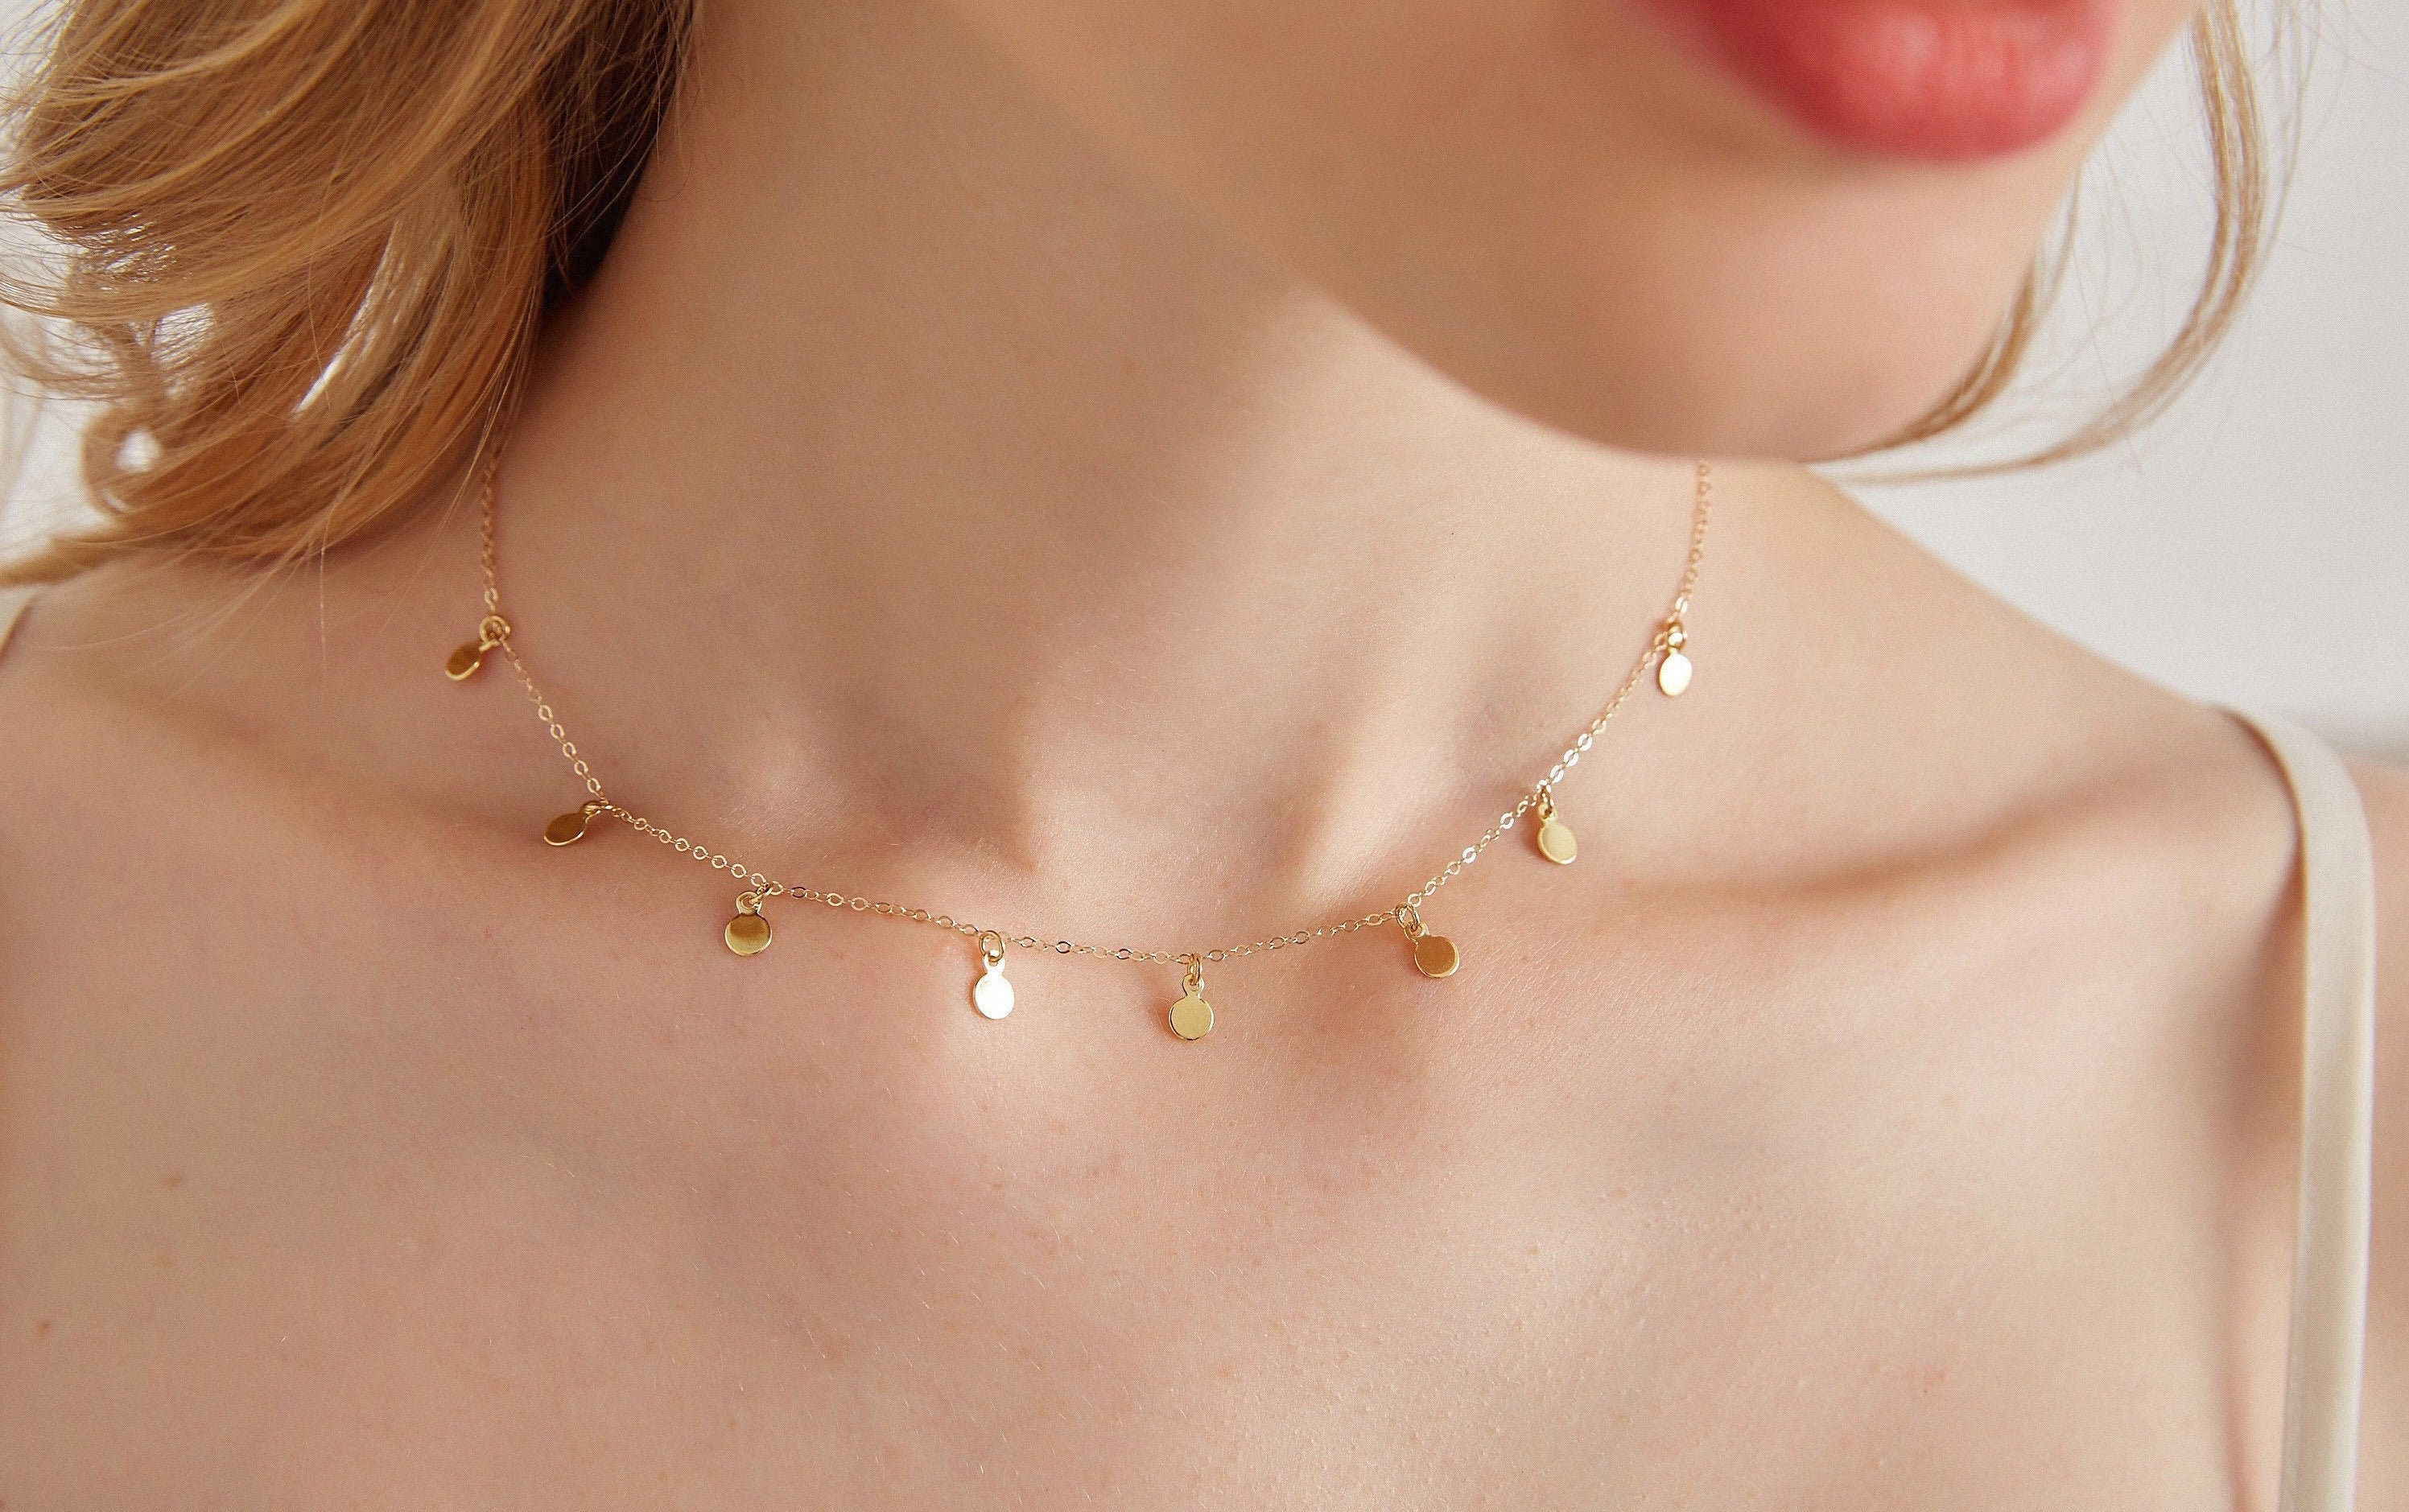 LOUISA SECRET Birthstone Heart Necklaces for Women Rose Gold